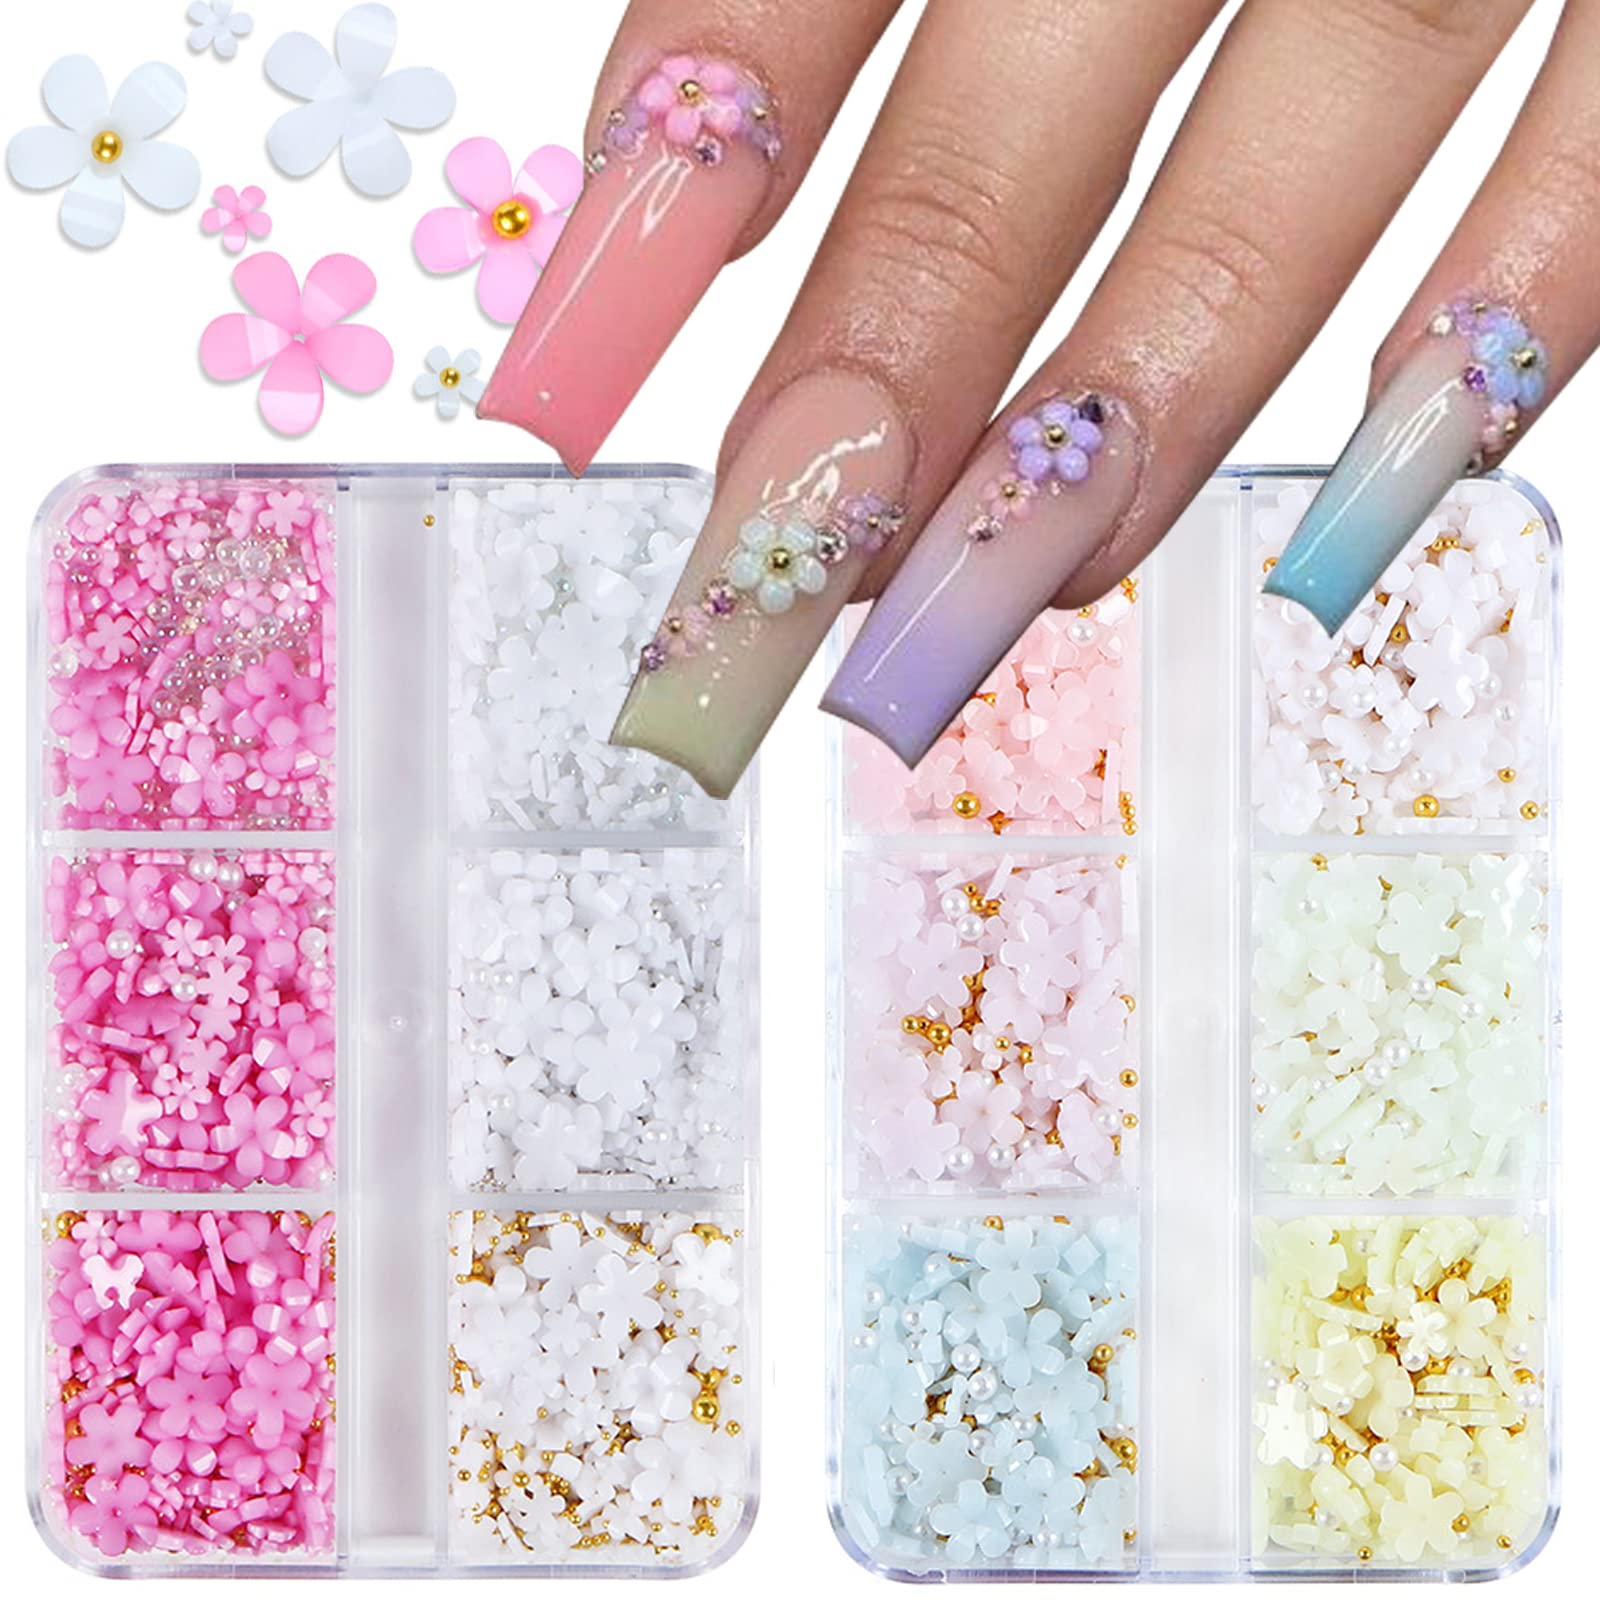 18 Stunning Pink Glitter Nails to Glam Up Your Fingertips | The KA Edit |  Şık tırnaklar, Tırnak tasarımı, Simli tırnaklar